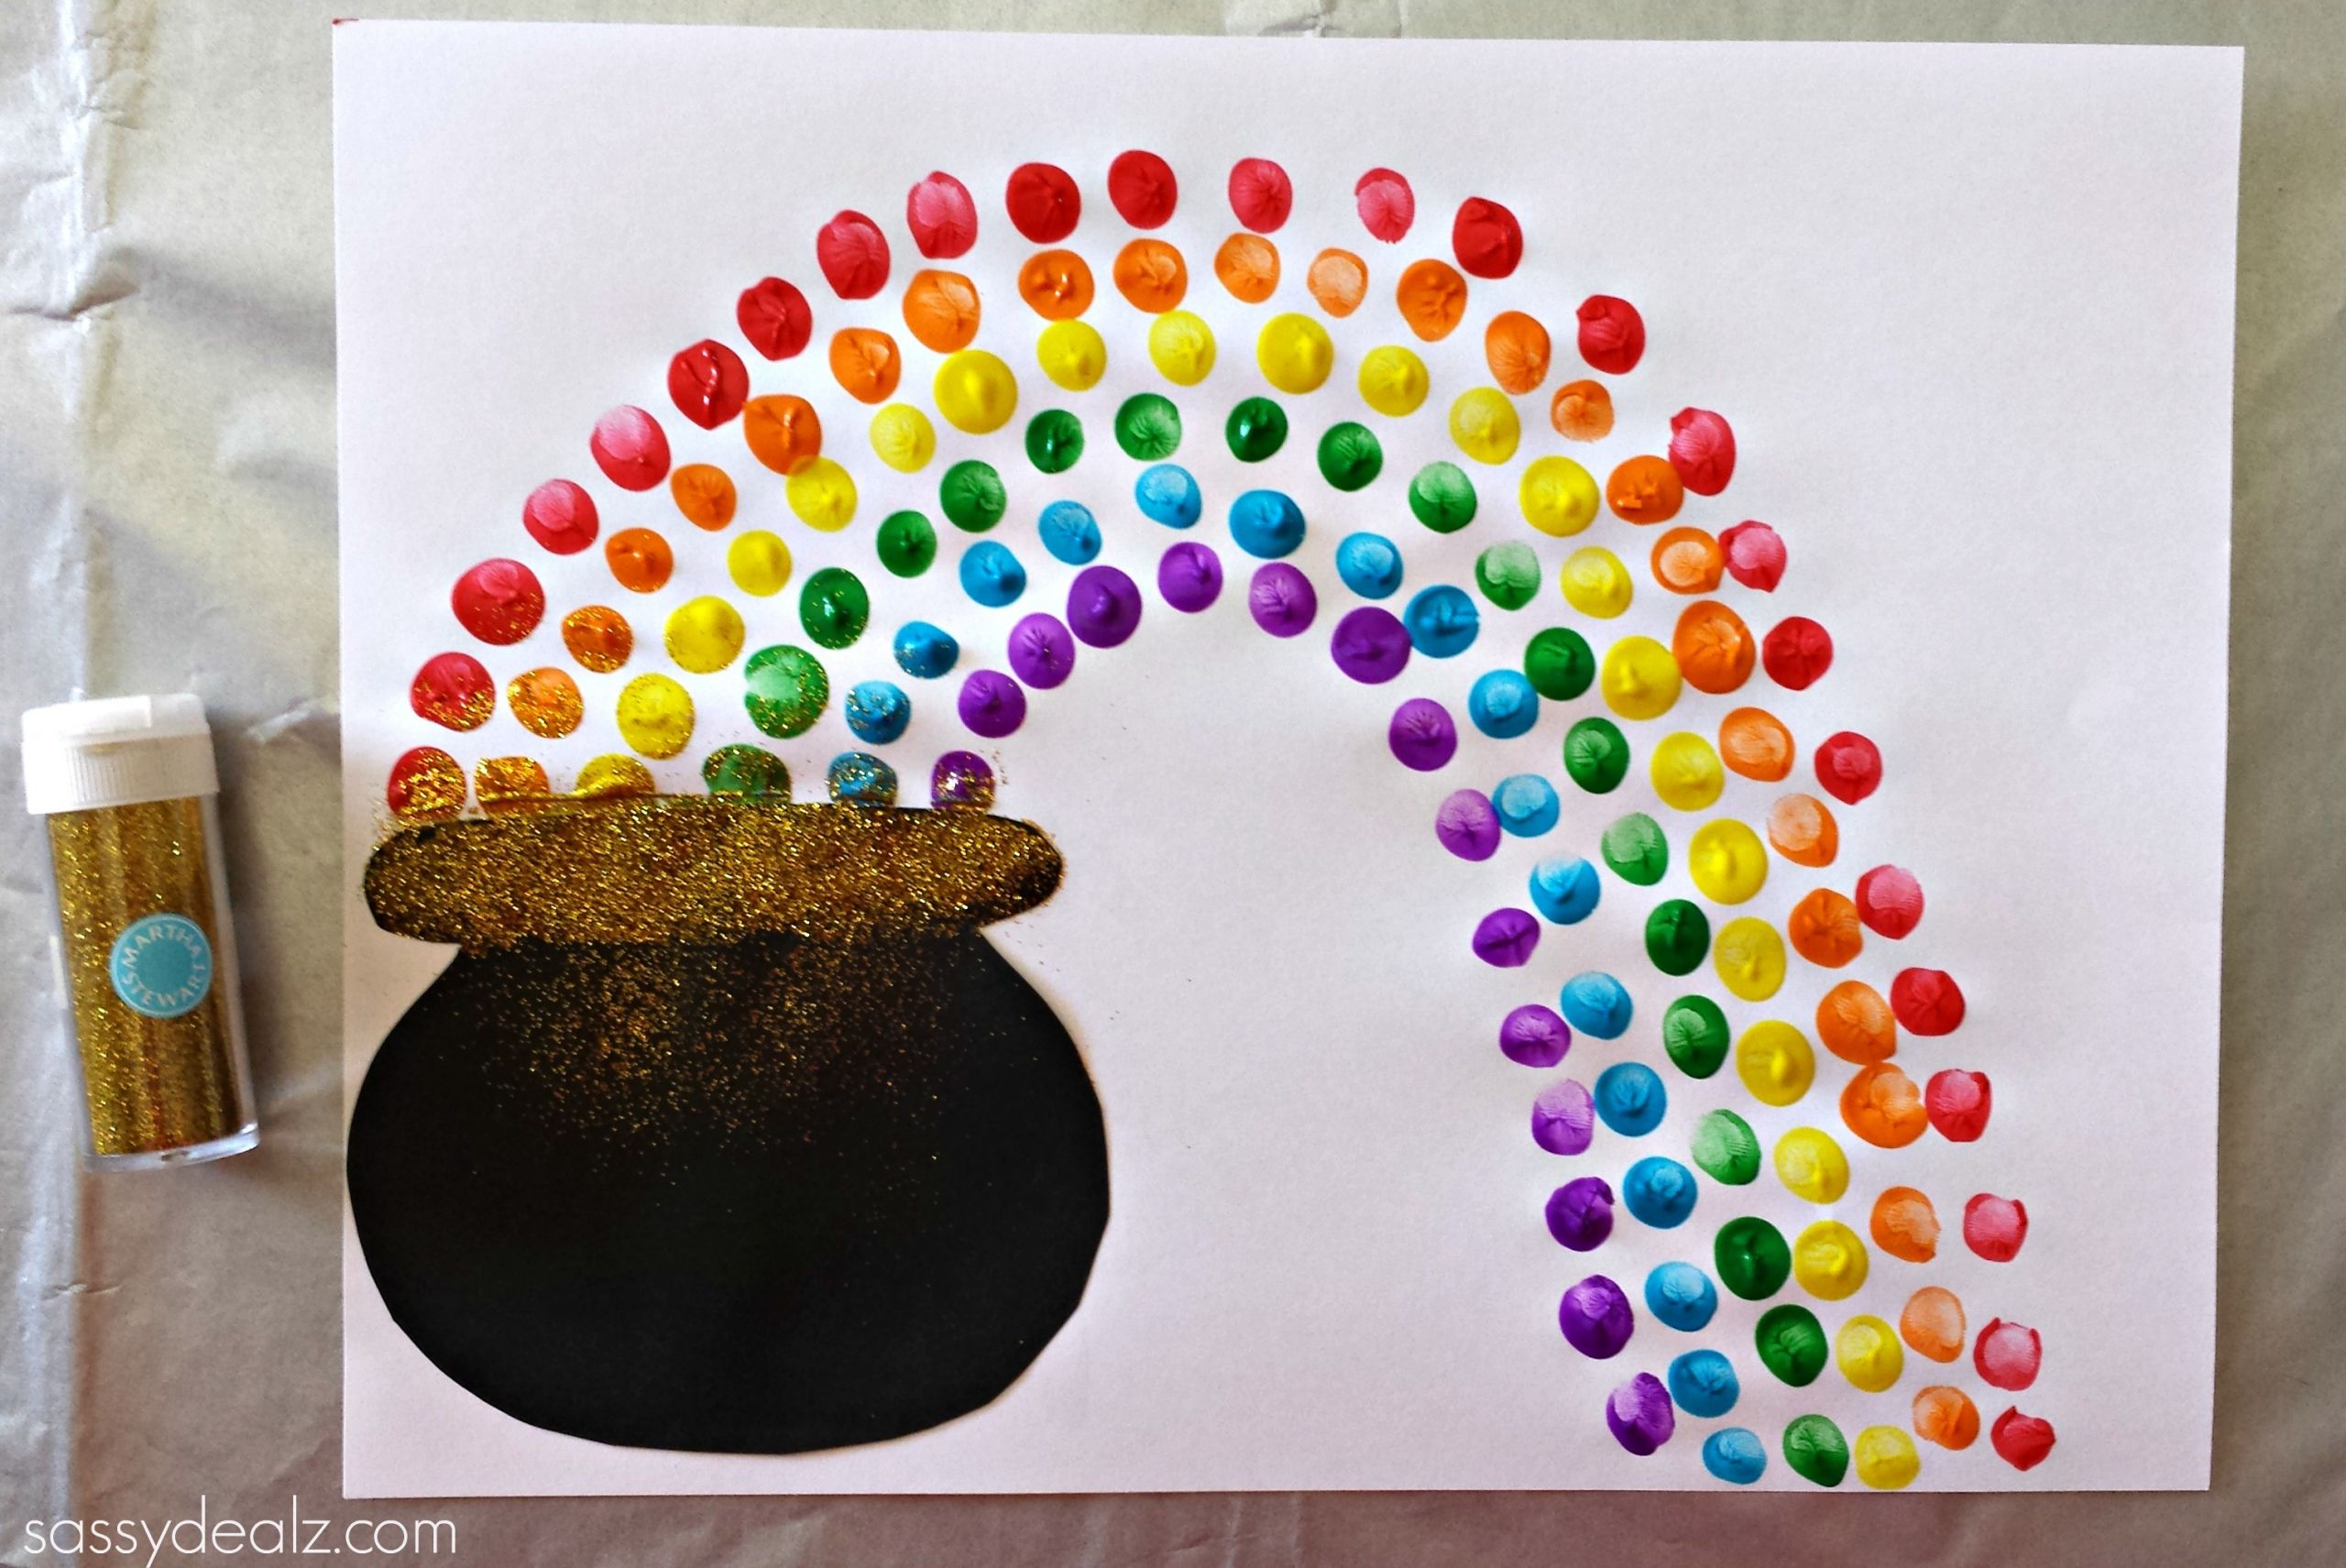 St Patrick Day Craft Ideas
 Fingerprint Rainbow Pot of Gold Craft For St Patrick s